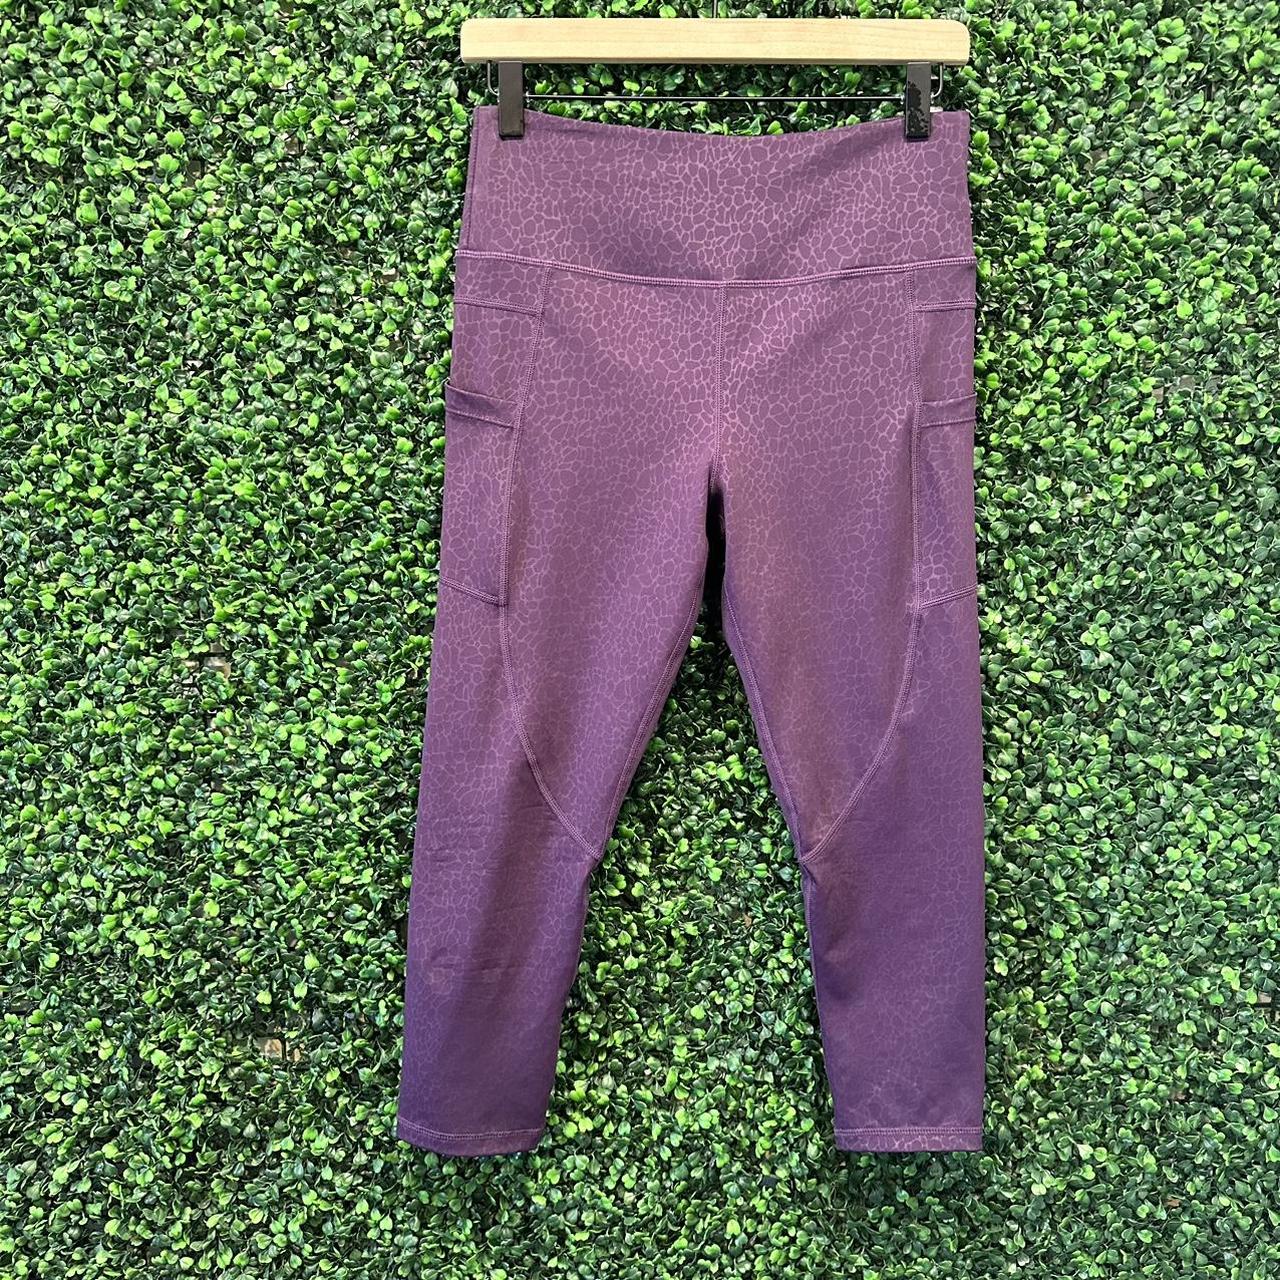 Zyia Purple Capri Leggings Size 8 - 10 Medium Side 3 - Depop